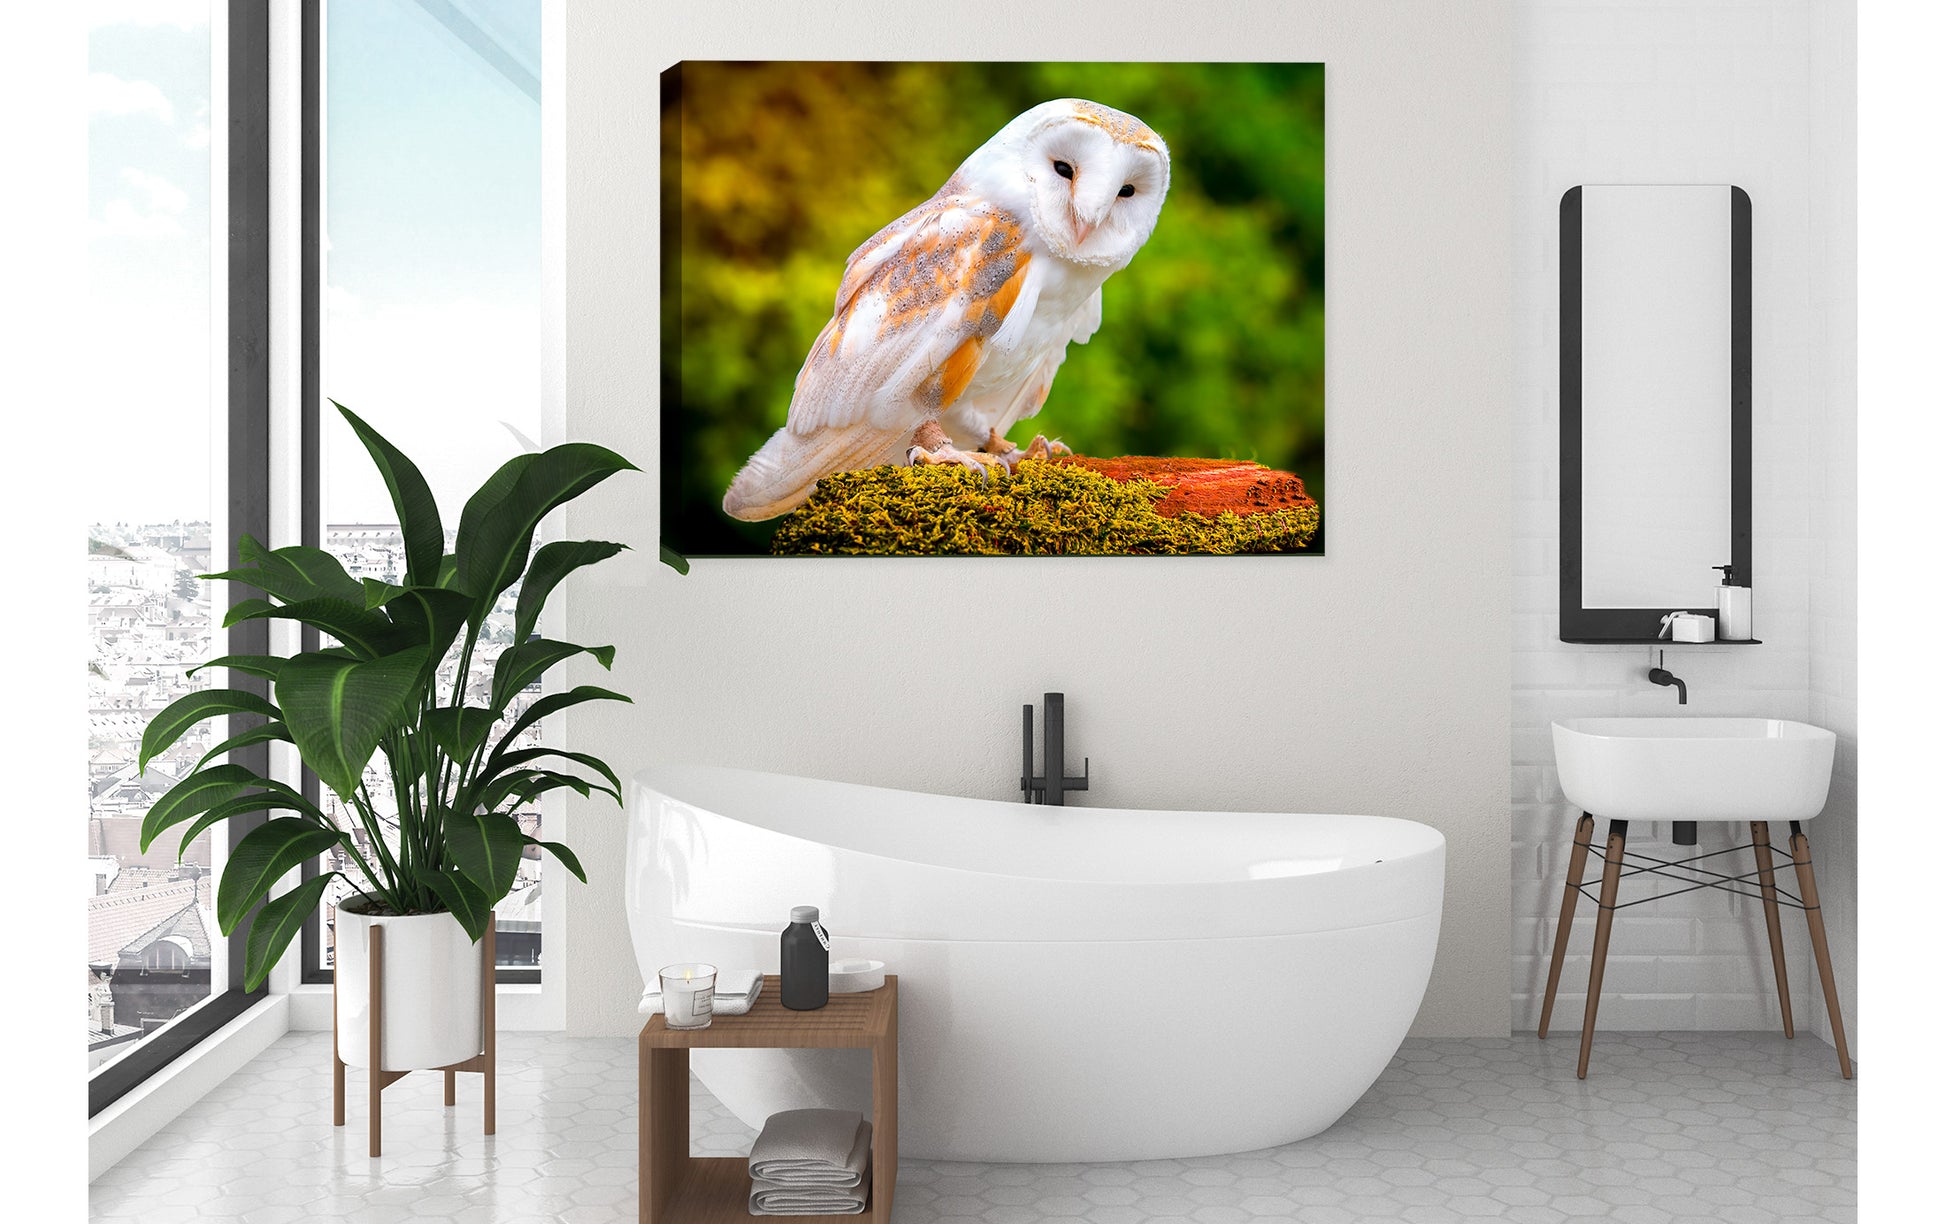 Owl Photo on Canvas in Bath Room